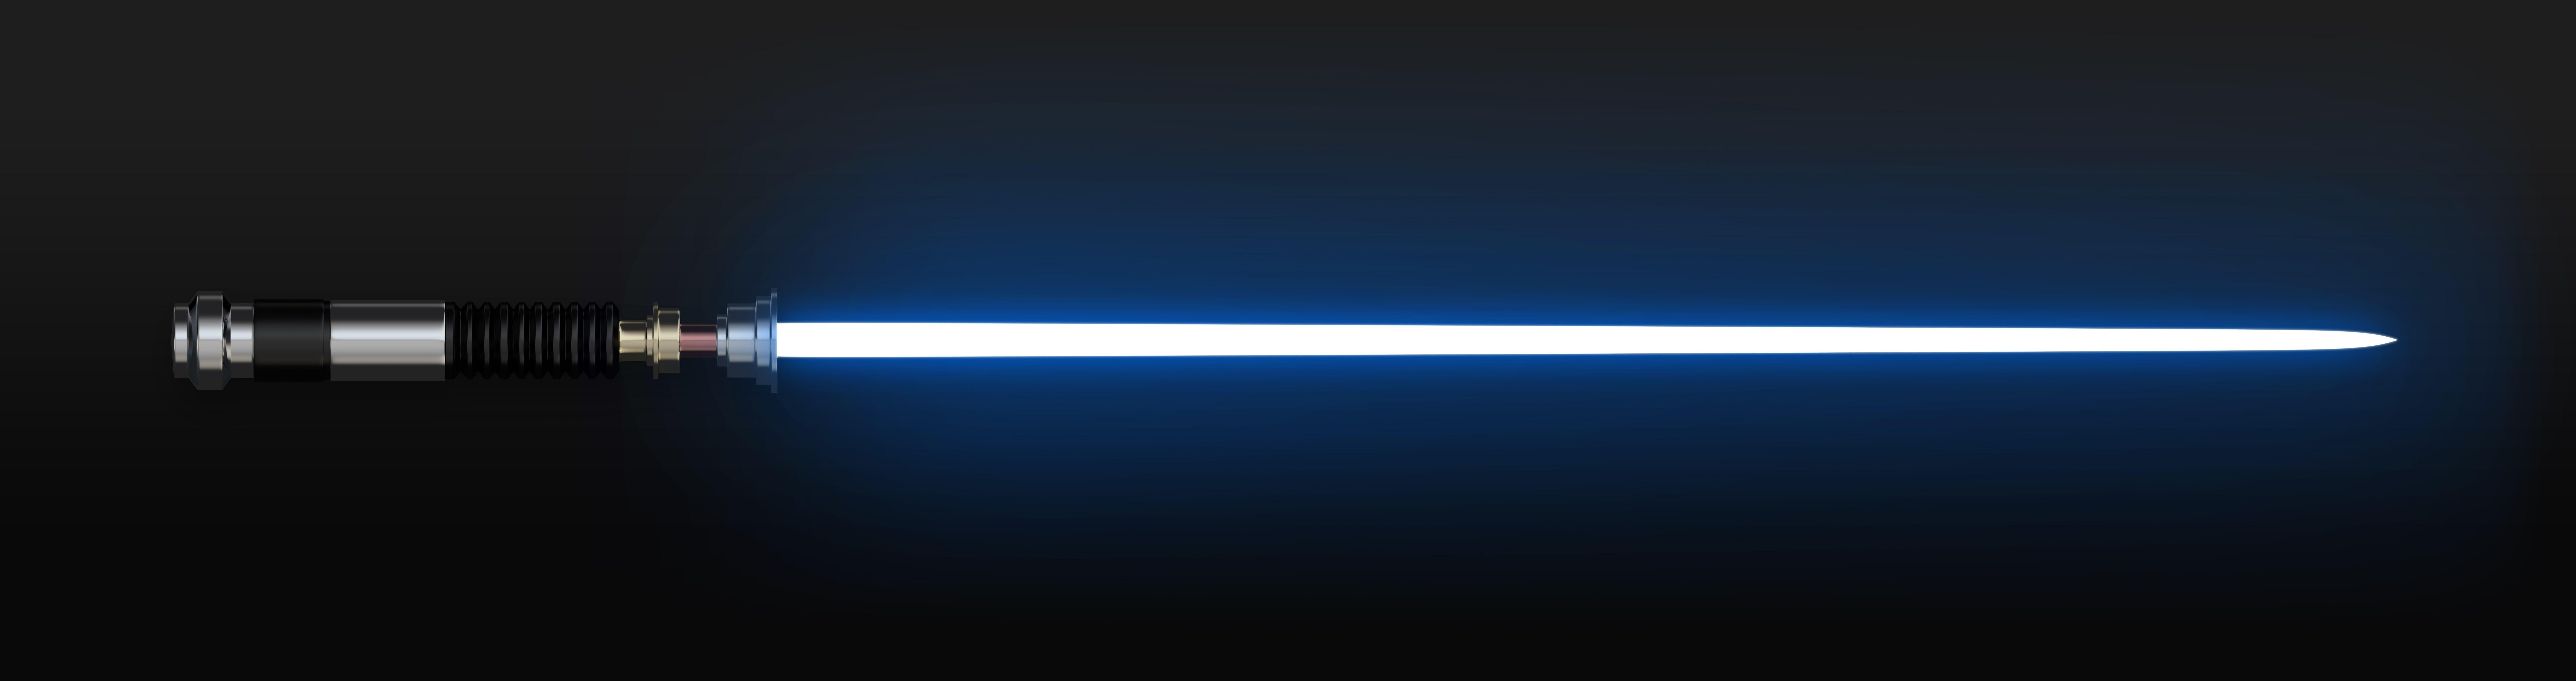 Lightsaber Star Wars Star Wars Lightsaber, star Wars, minimalist, sci